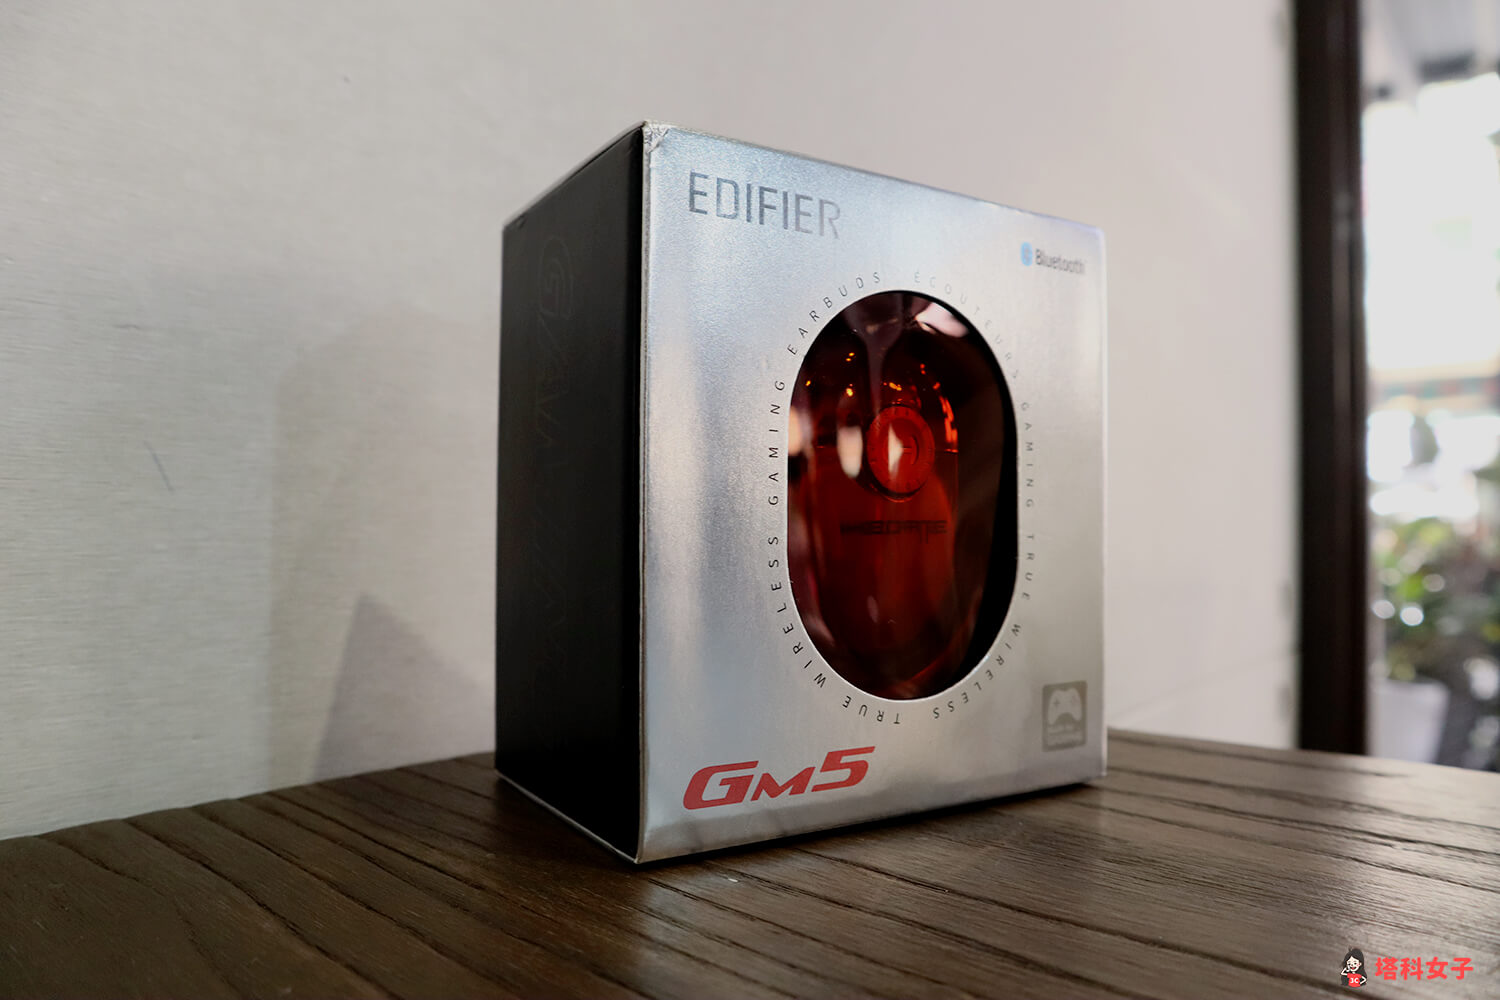 EDIFIER GM5 真無線藍牙耳機 開箱